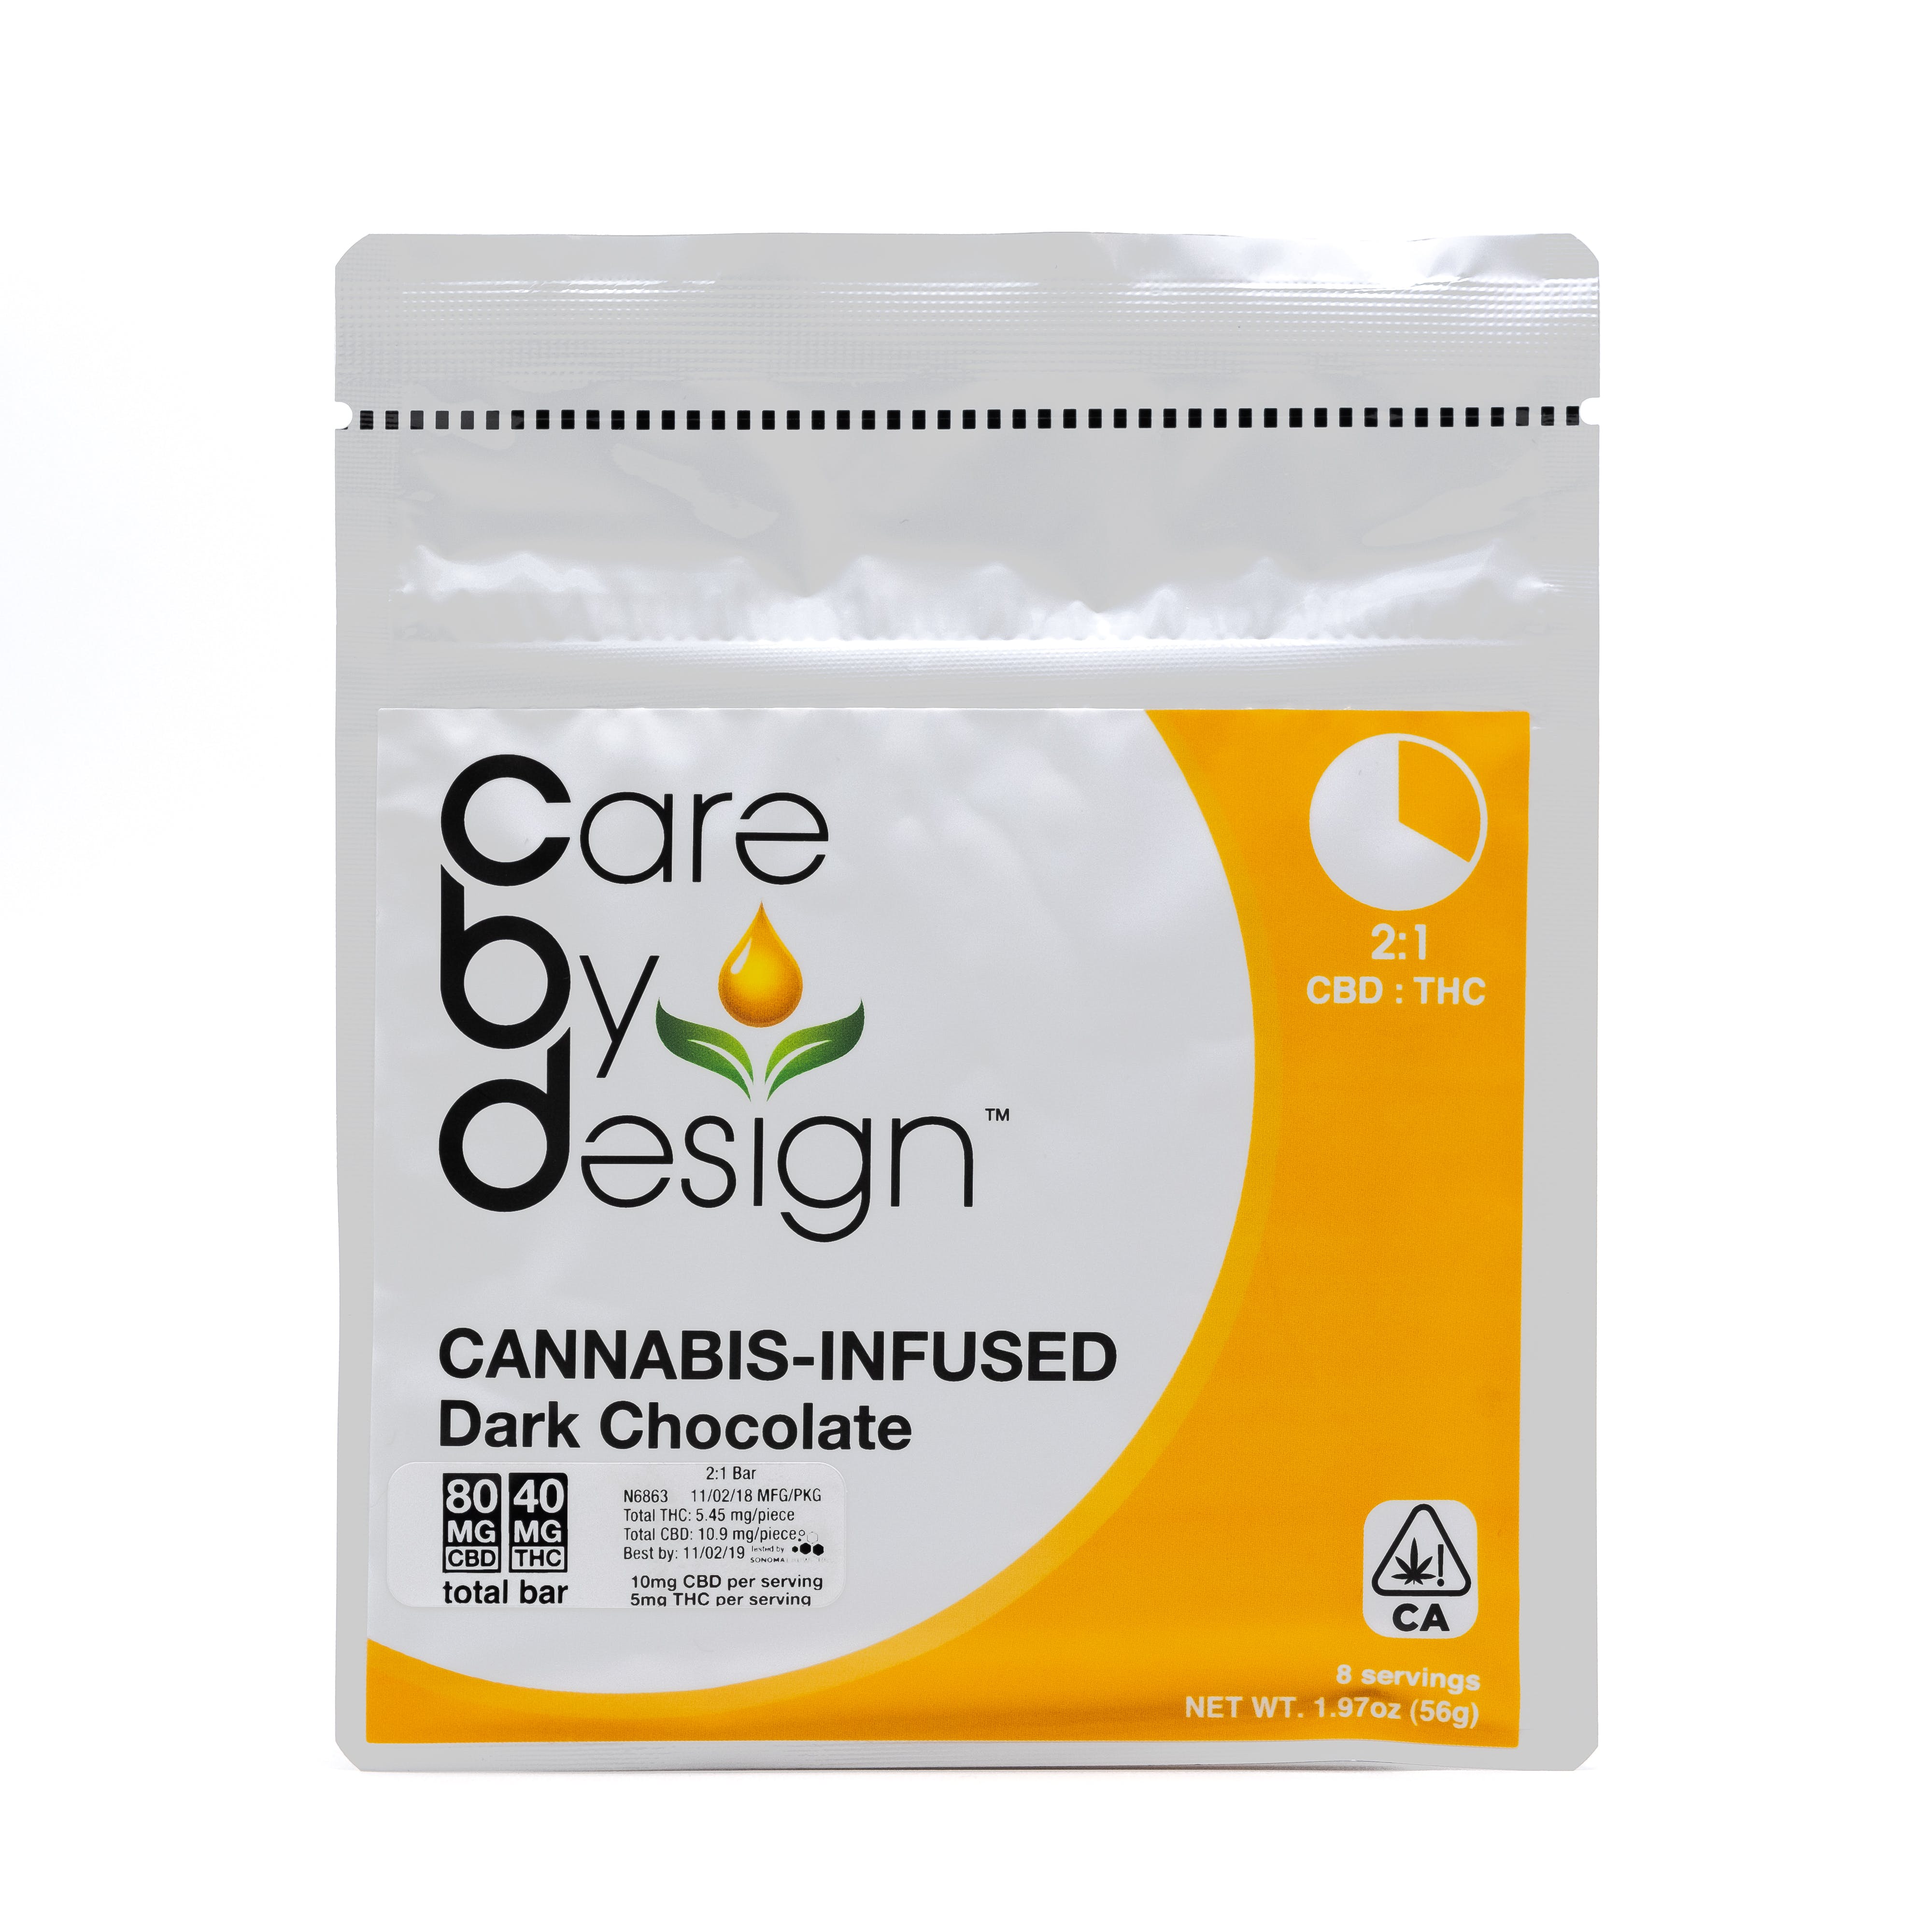 edible-21-cbd-rich-dark-chocolate-80mg-care-by-design